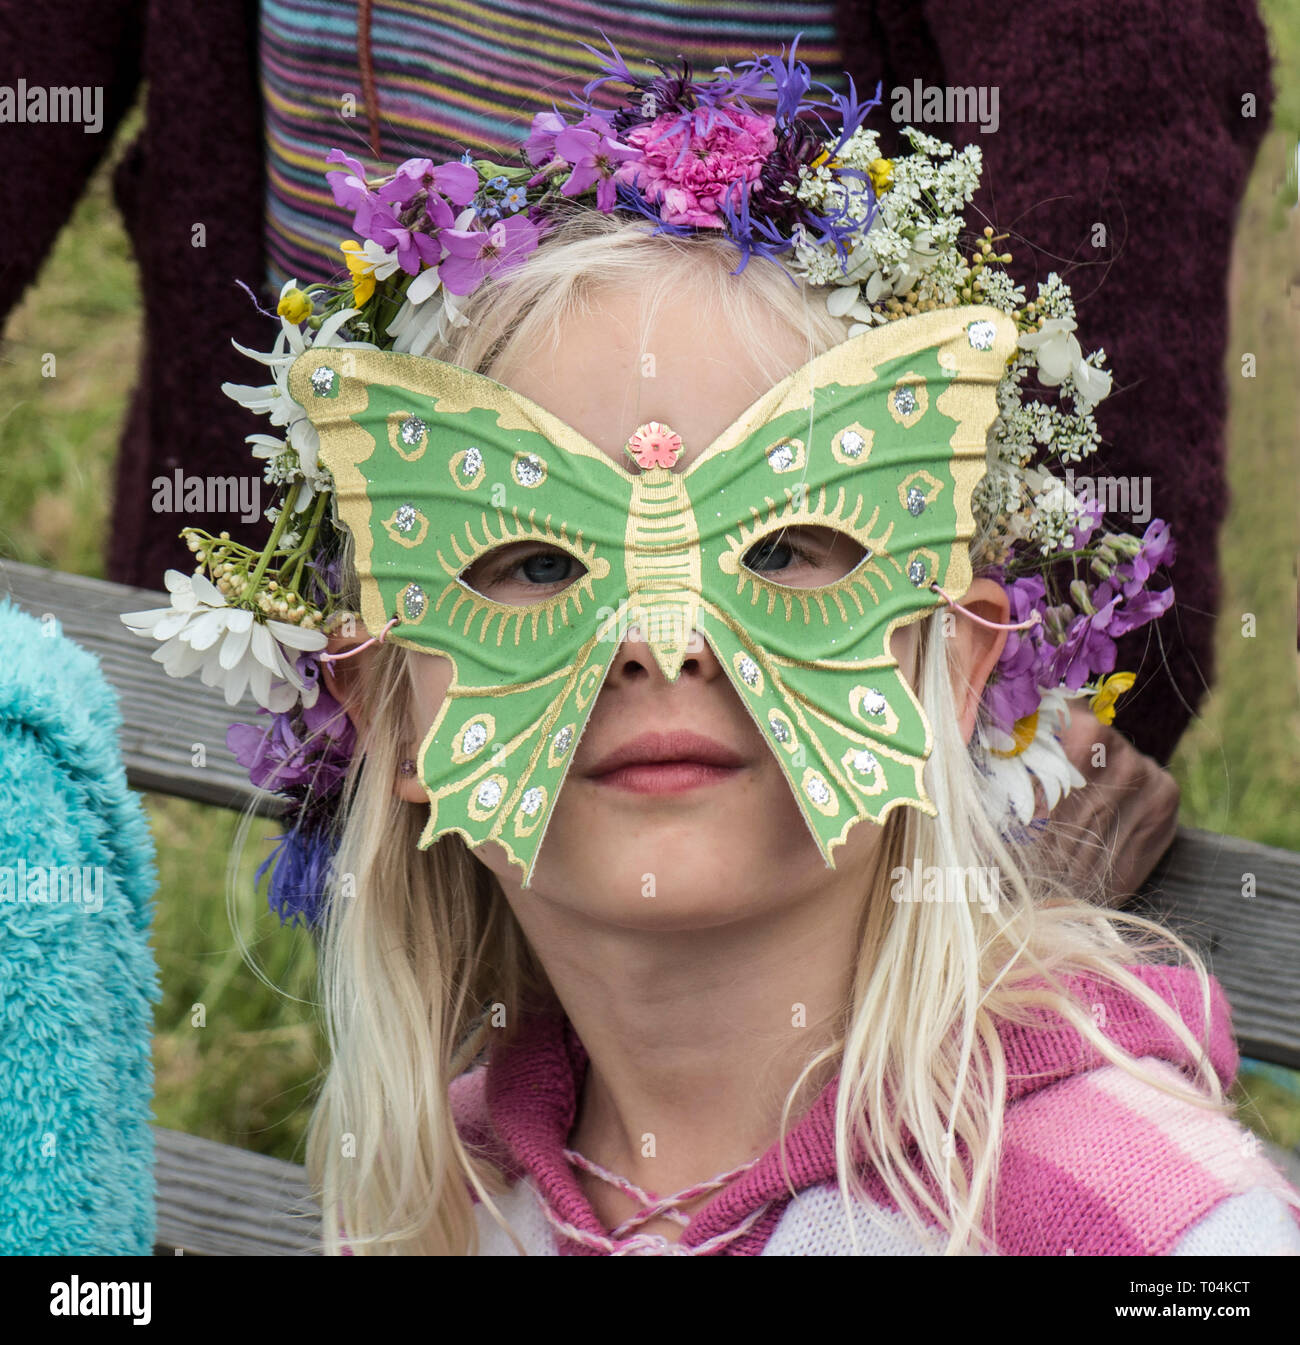 Máscara de mariposa fotografías e imágenes de alta resolución - Alamy